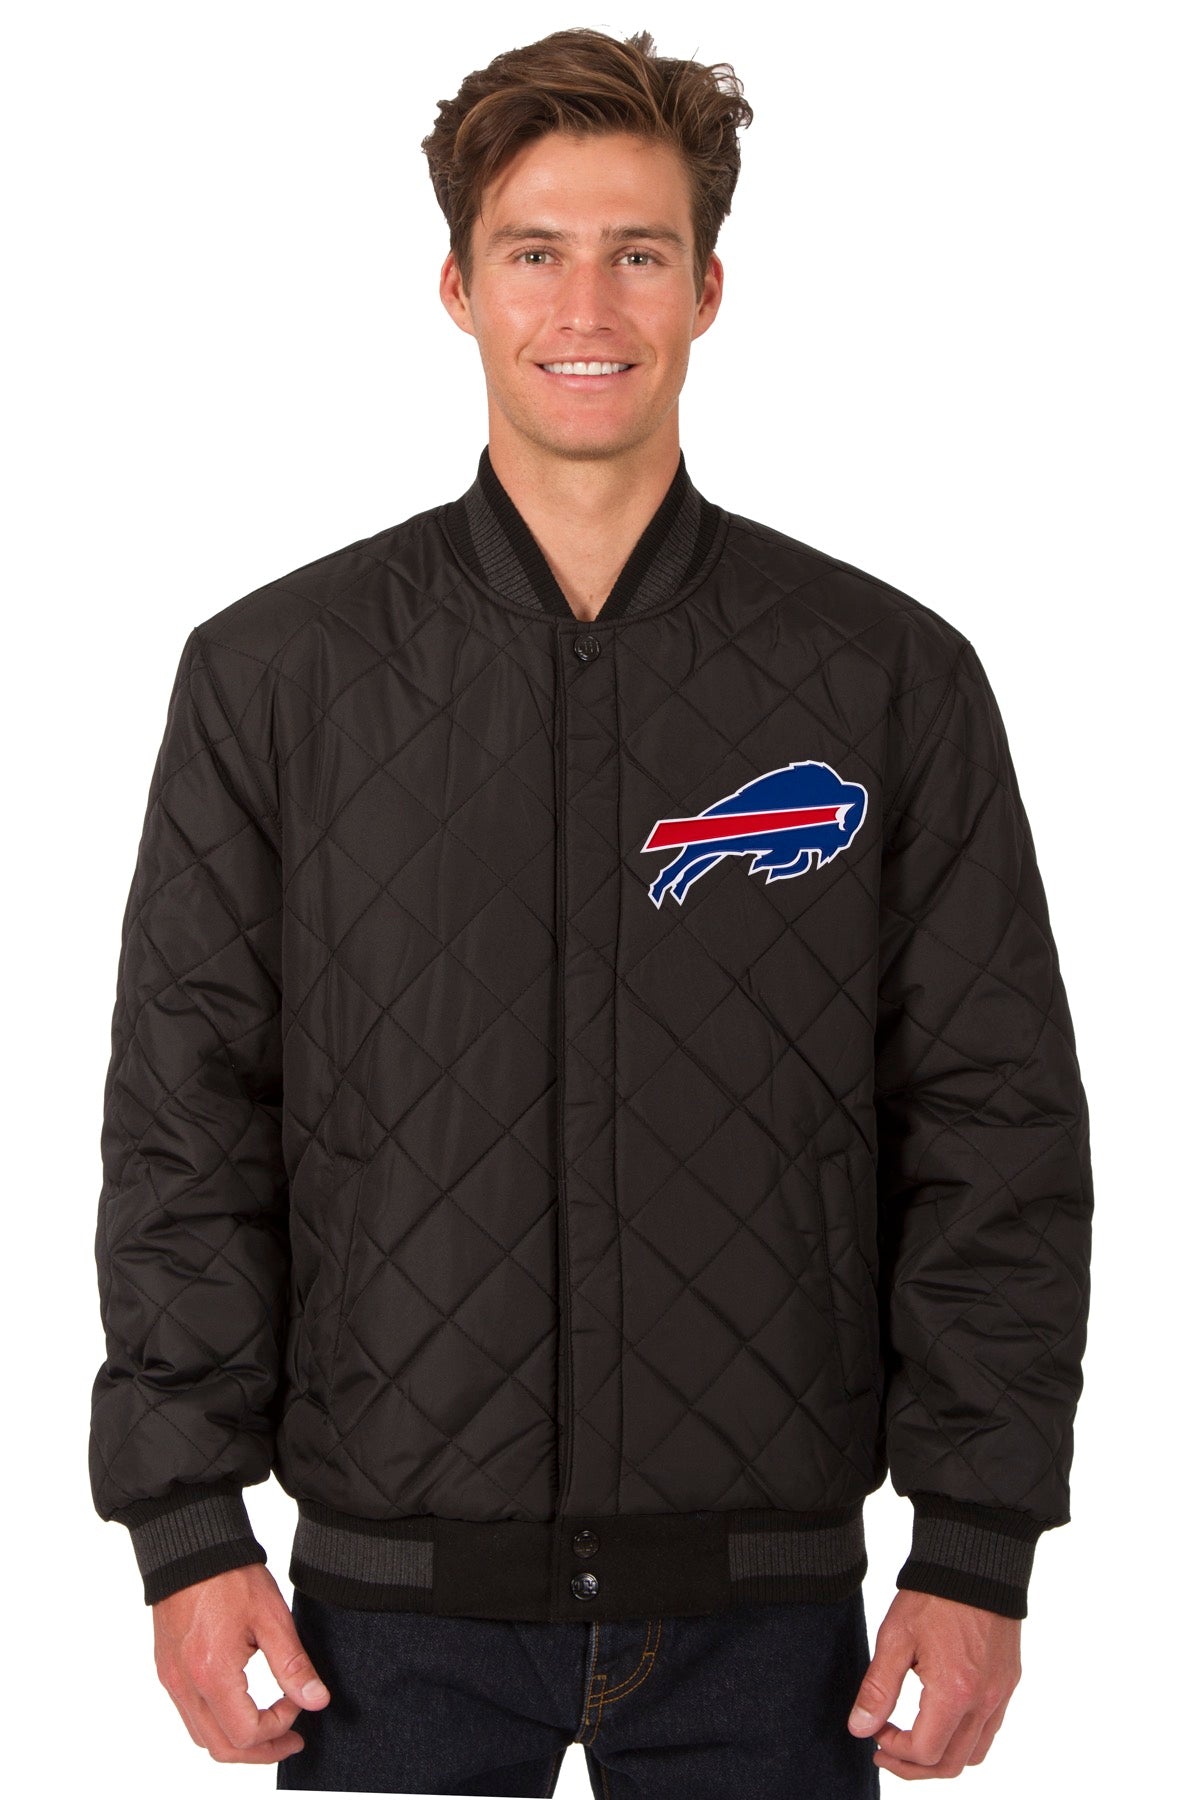 Buffalo Bills Reversible Wool and Leather Jacket